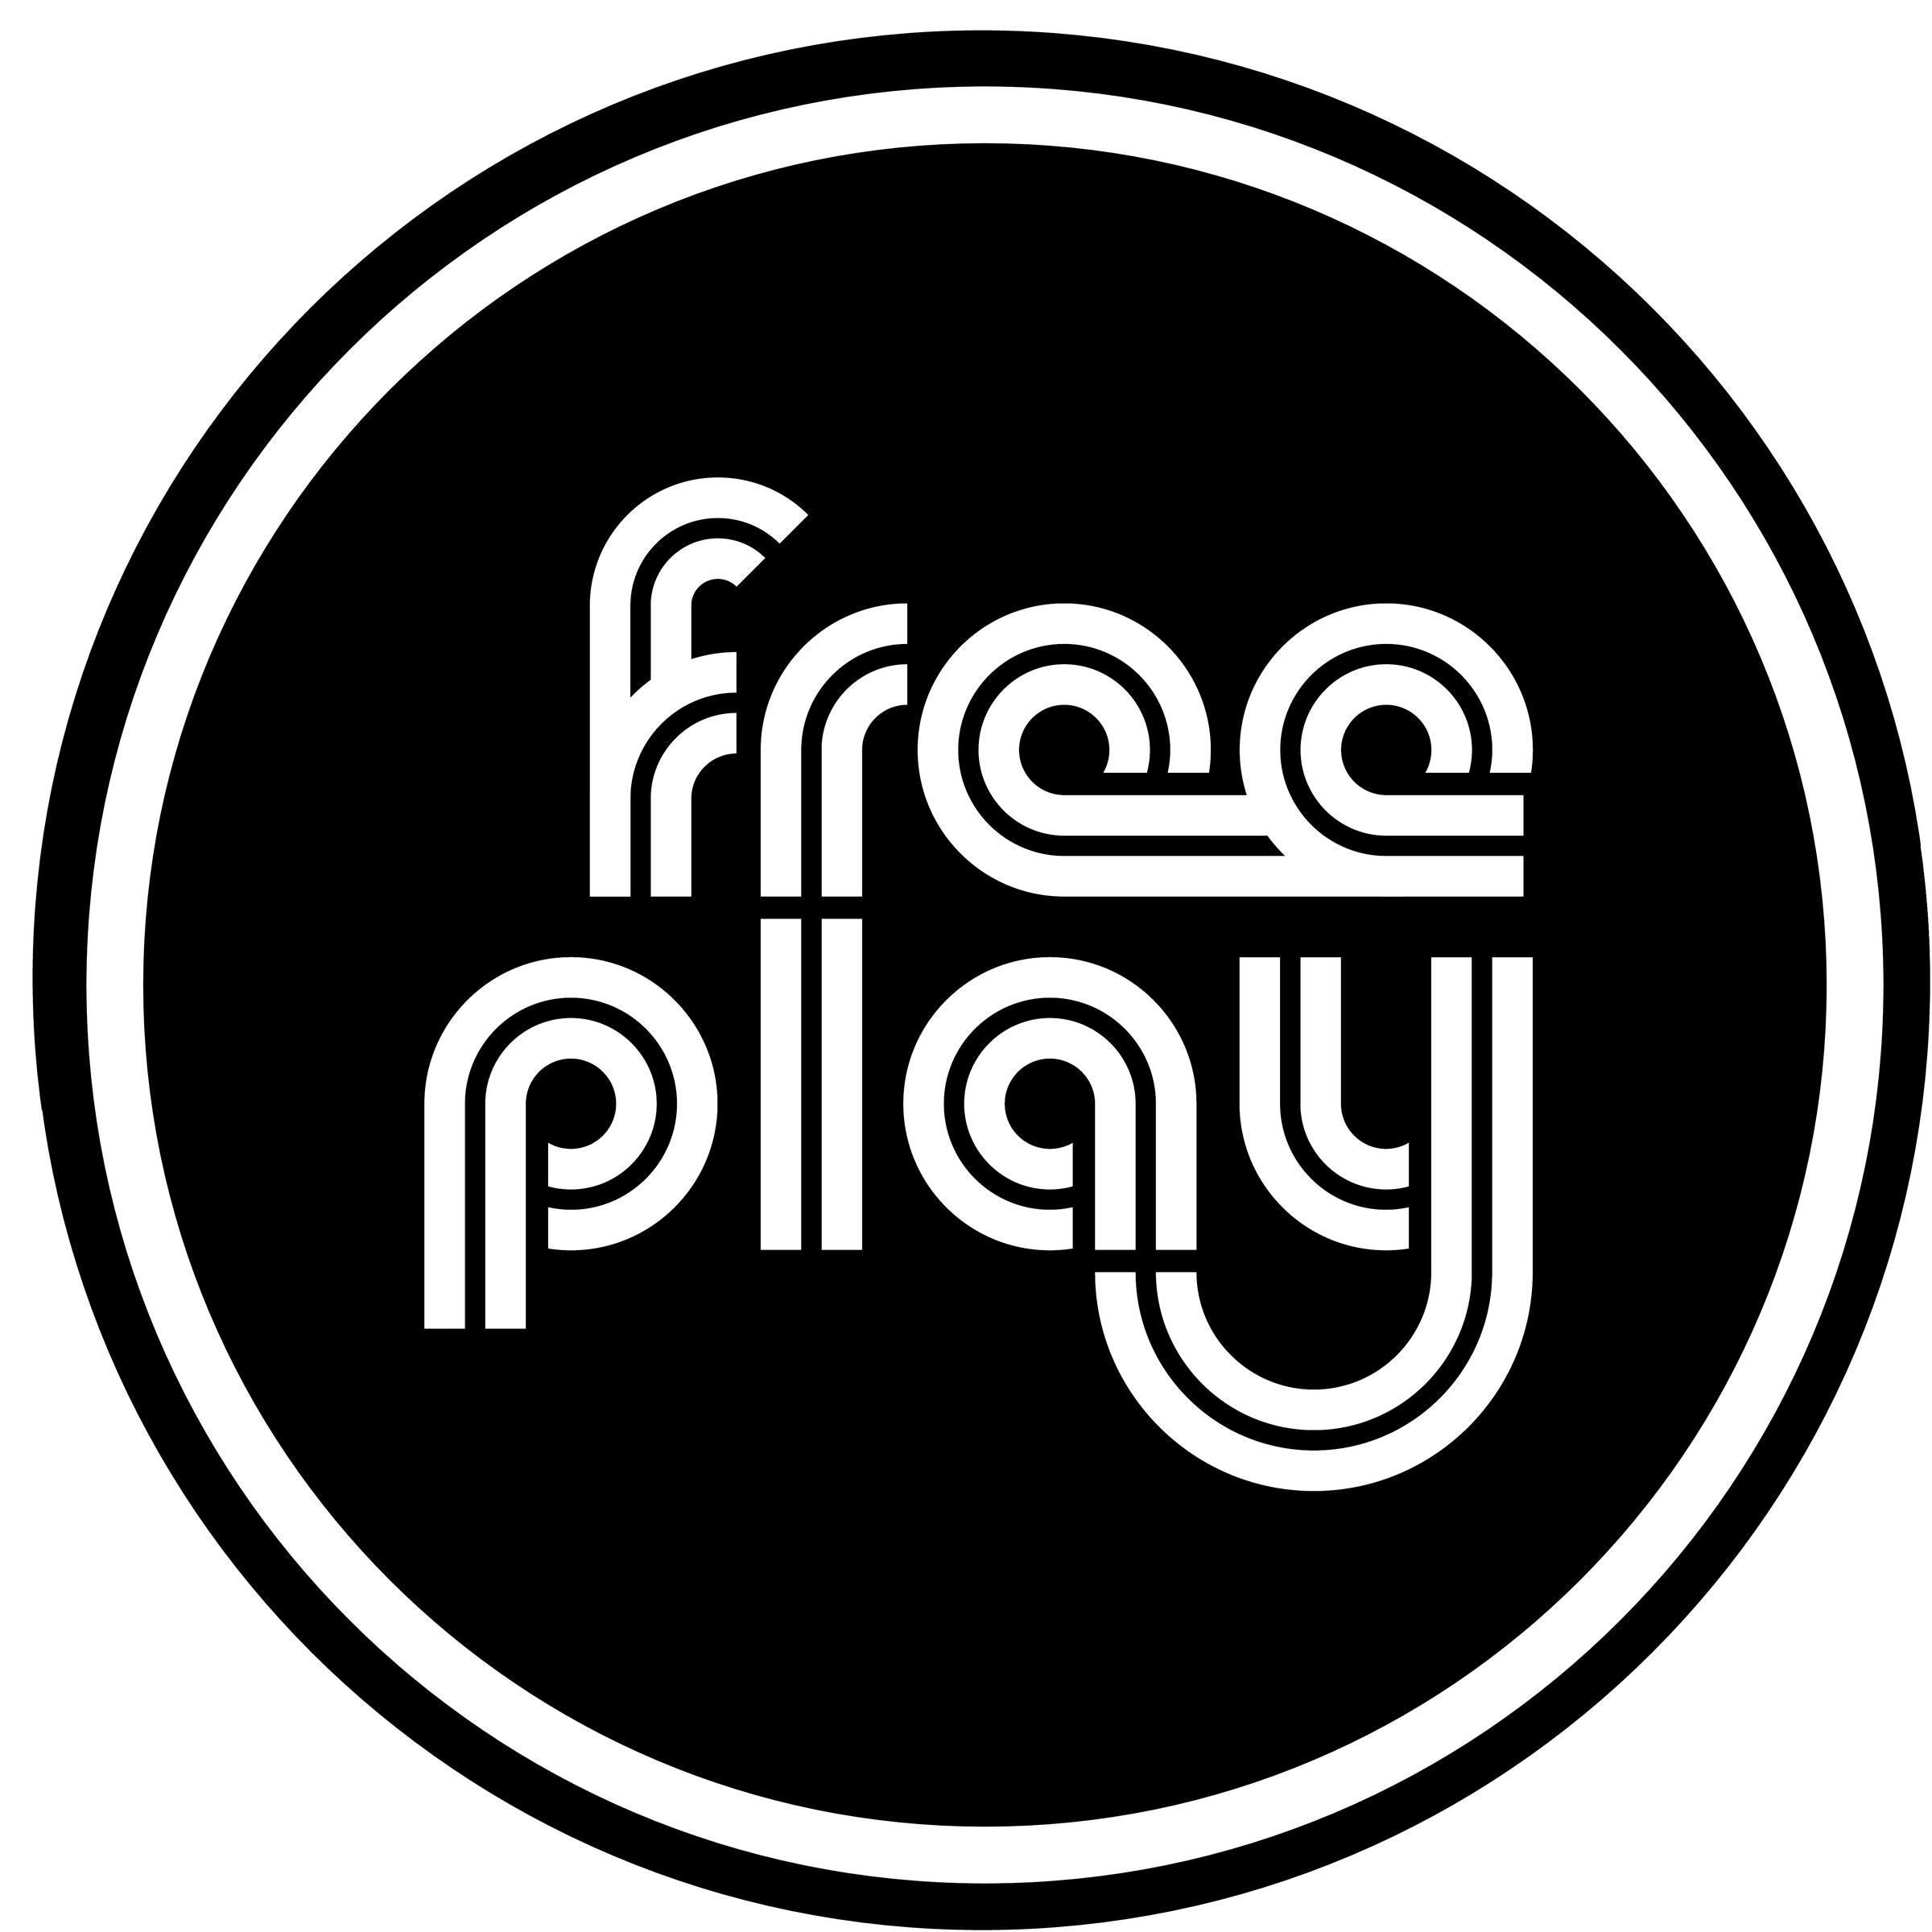 Free play